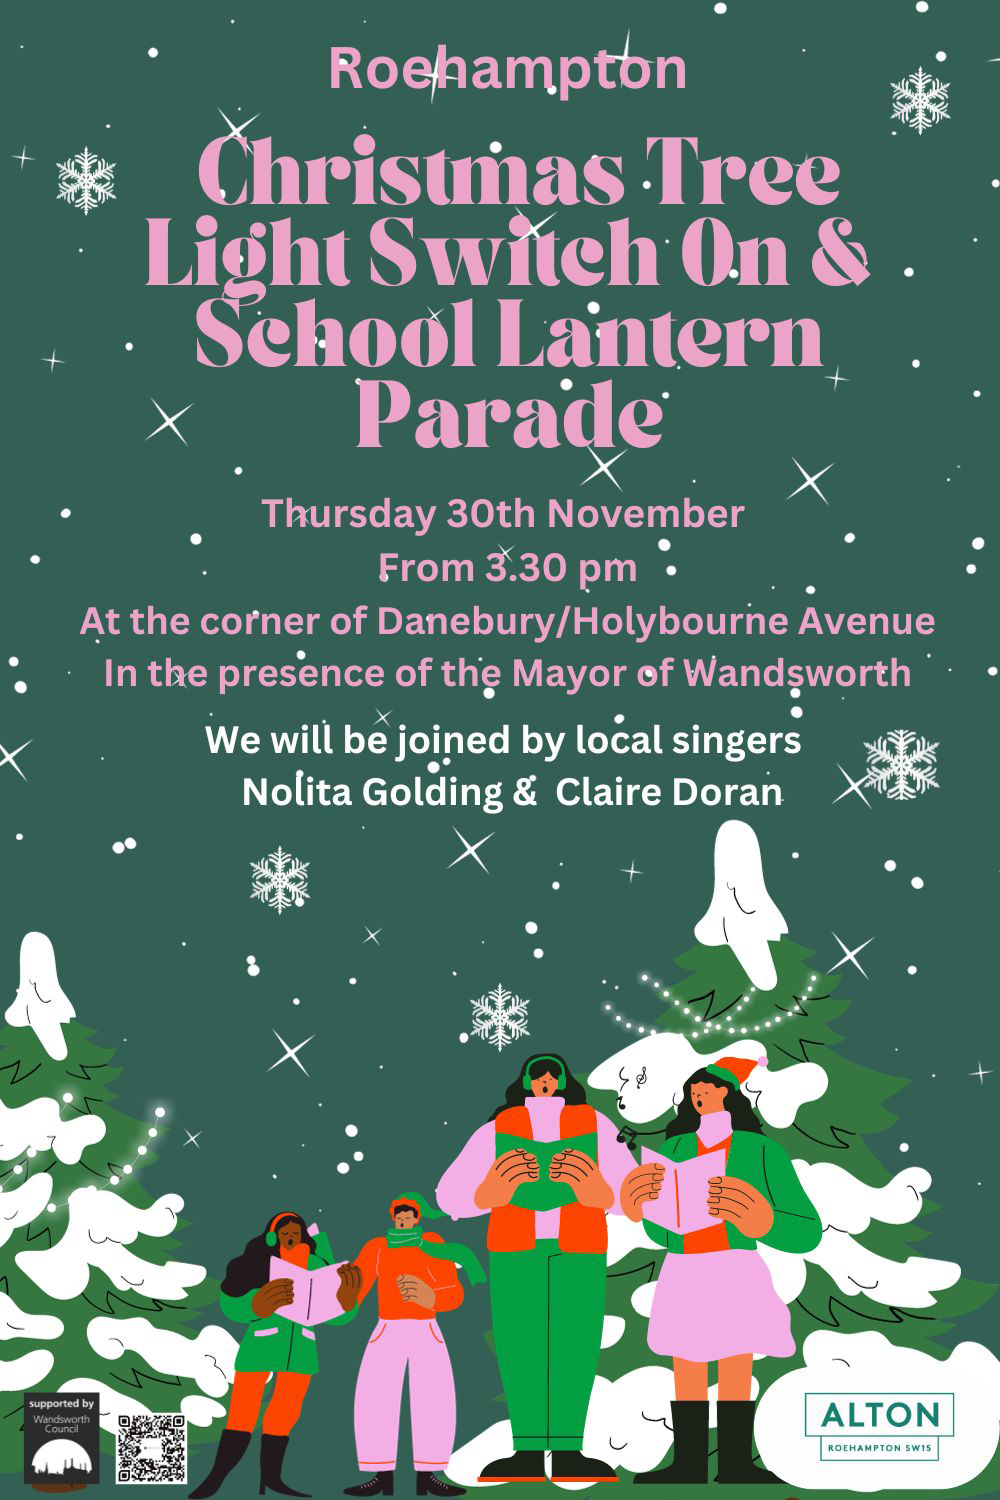 Christmas Tree Light Switch-on & School Lantern Parade